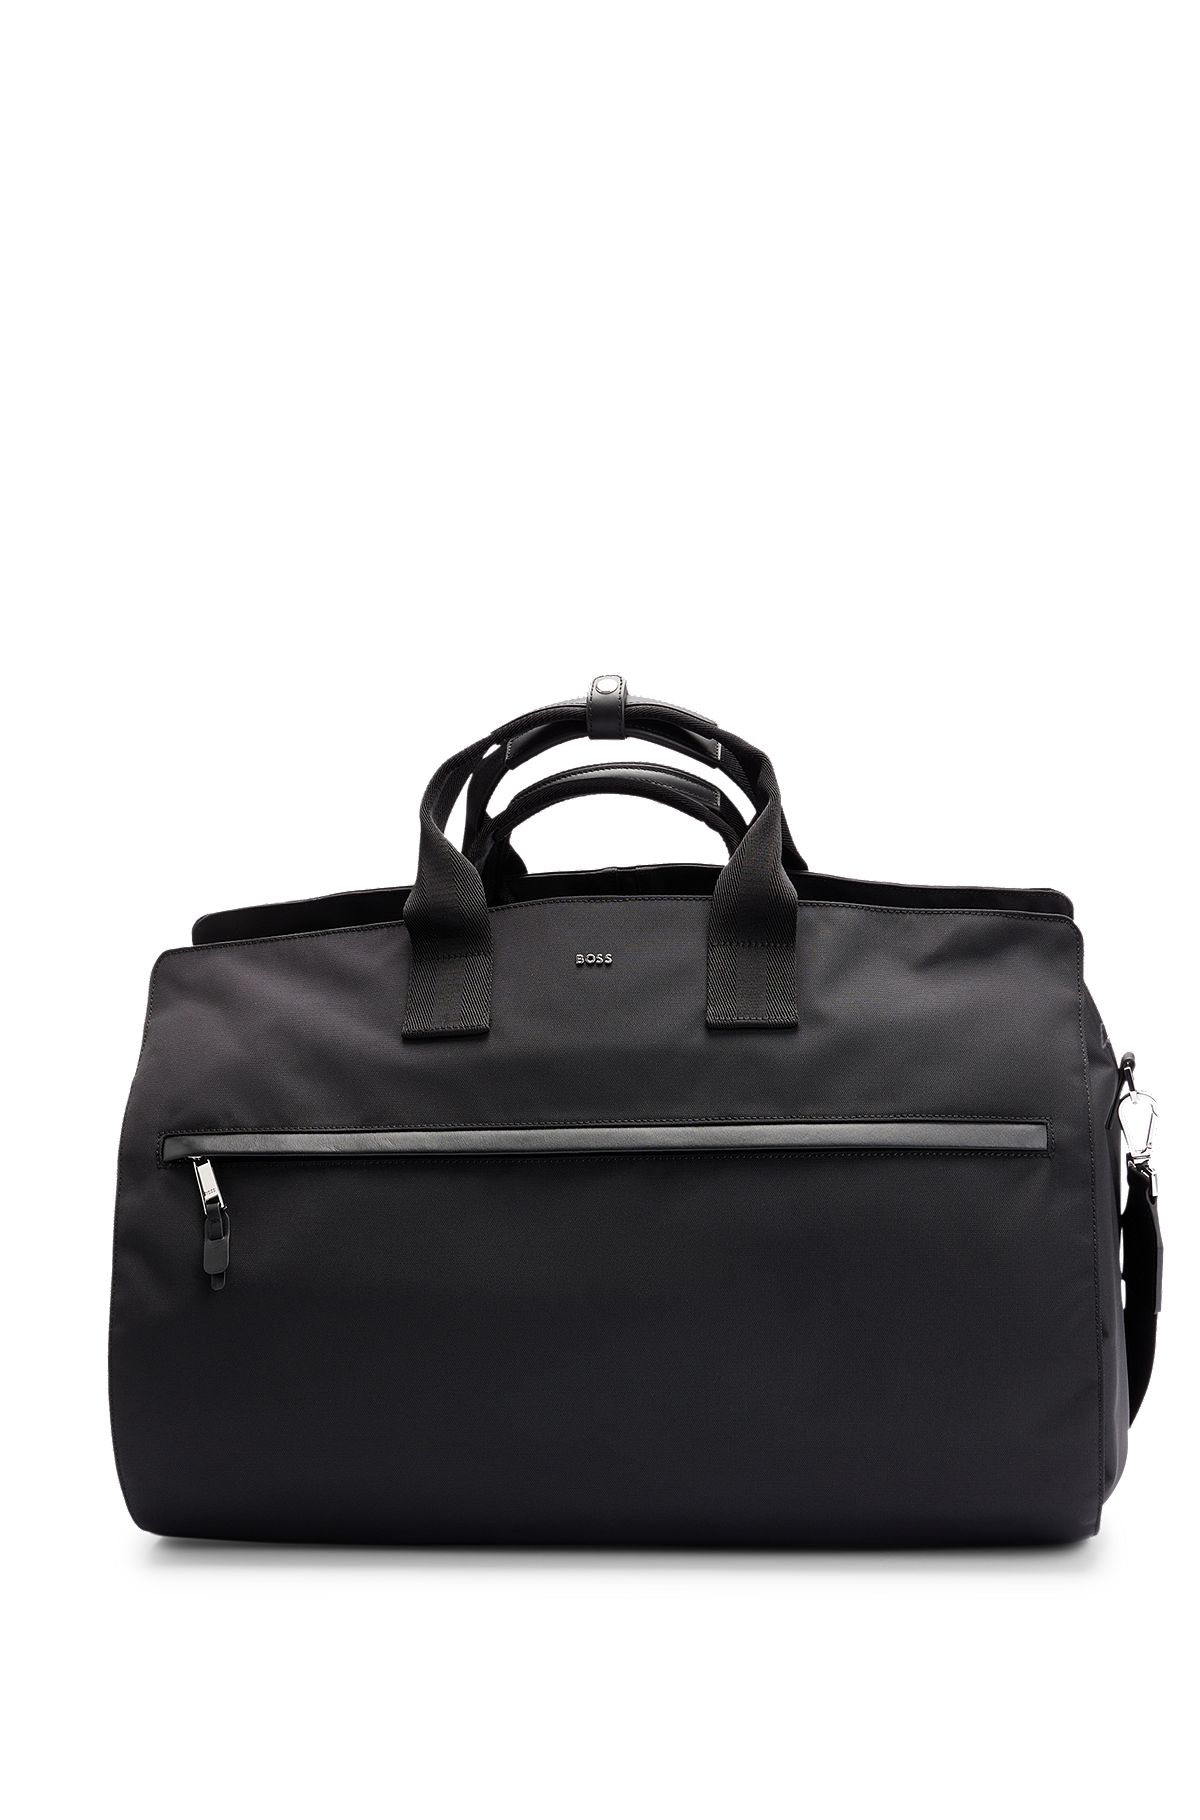 Garment bag with top handle and detachable shoulder strap, Black